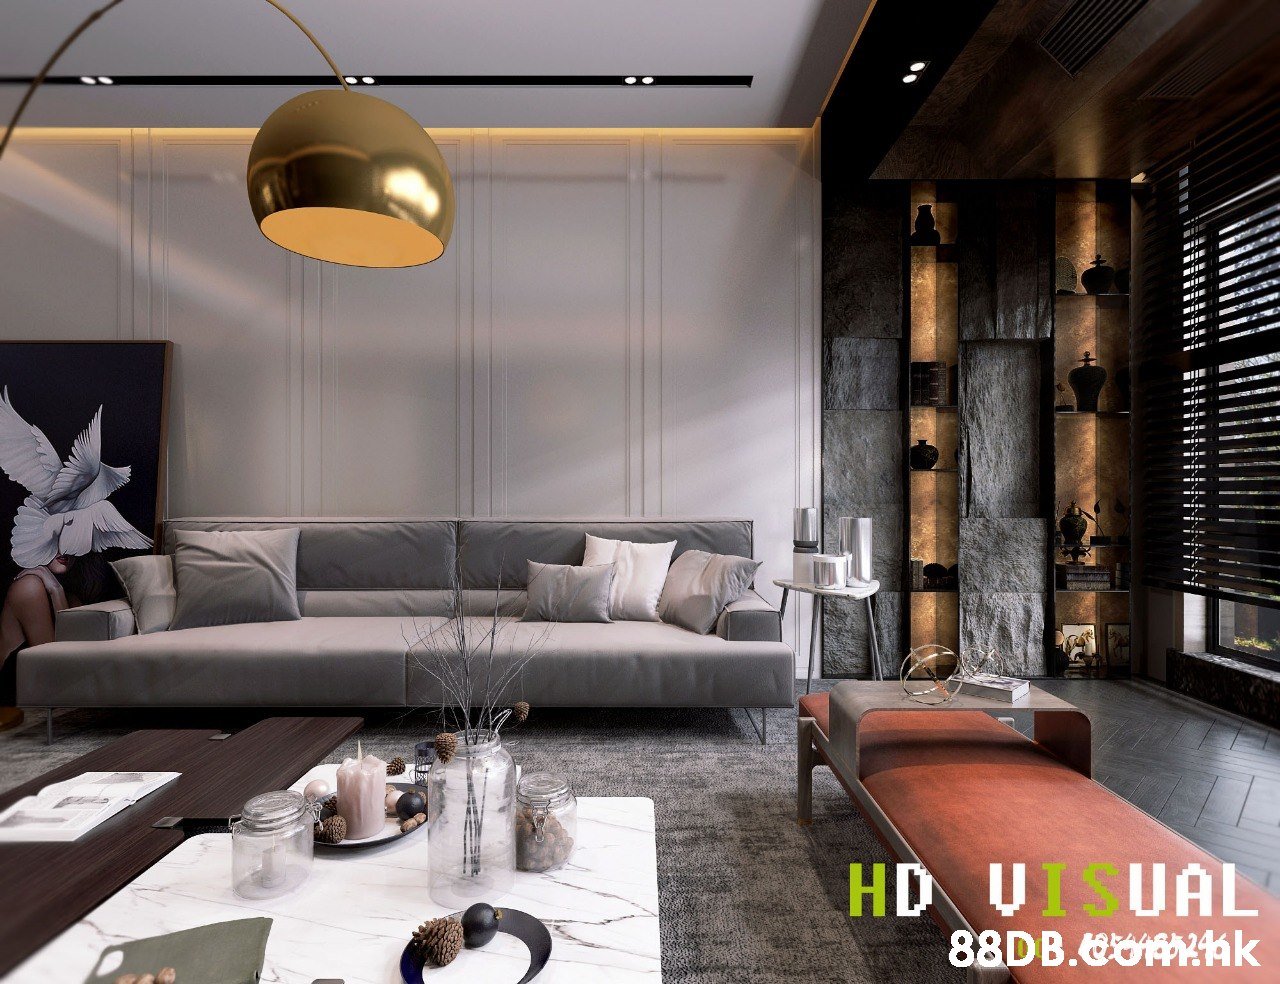 HD UISUAL 88DB.U k  Living room,Interior design,Room,Furniture,Ceiling